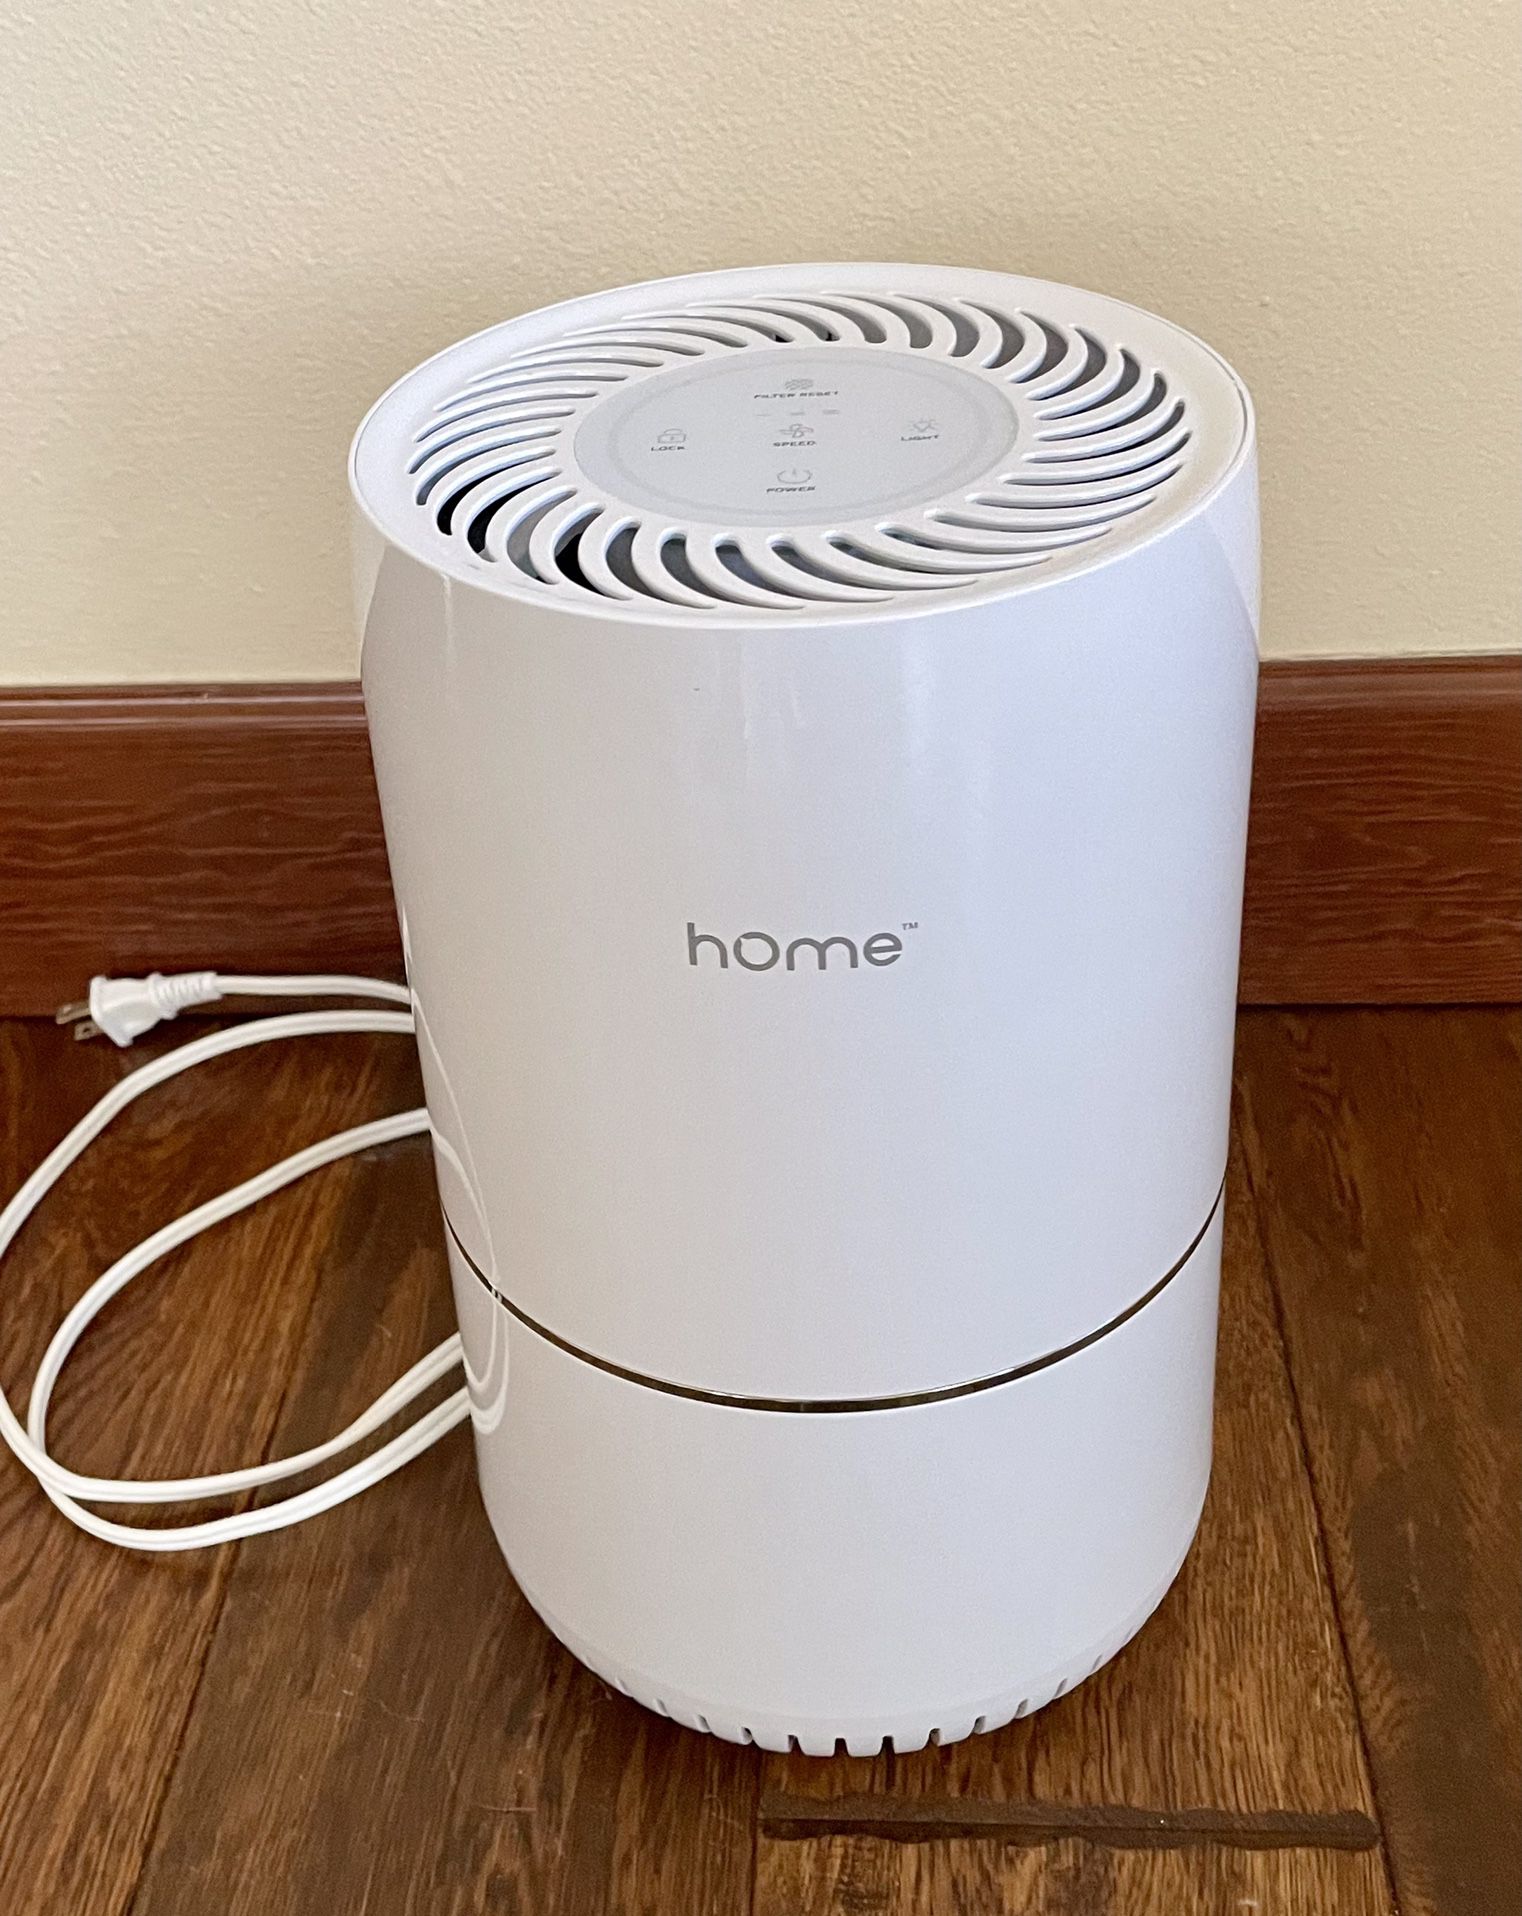 Home Labs True Hepa air purifier - $25